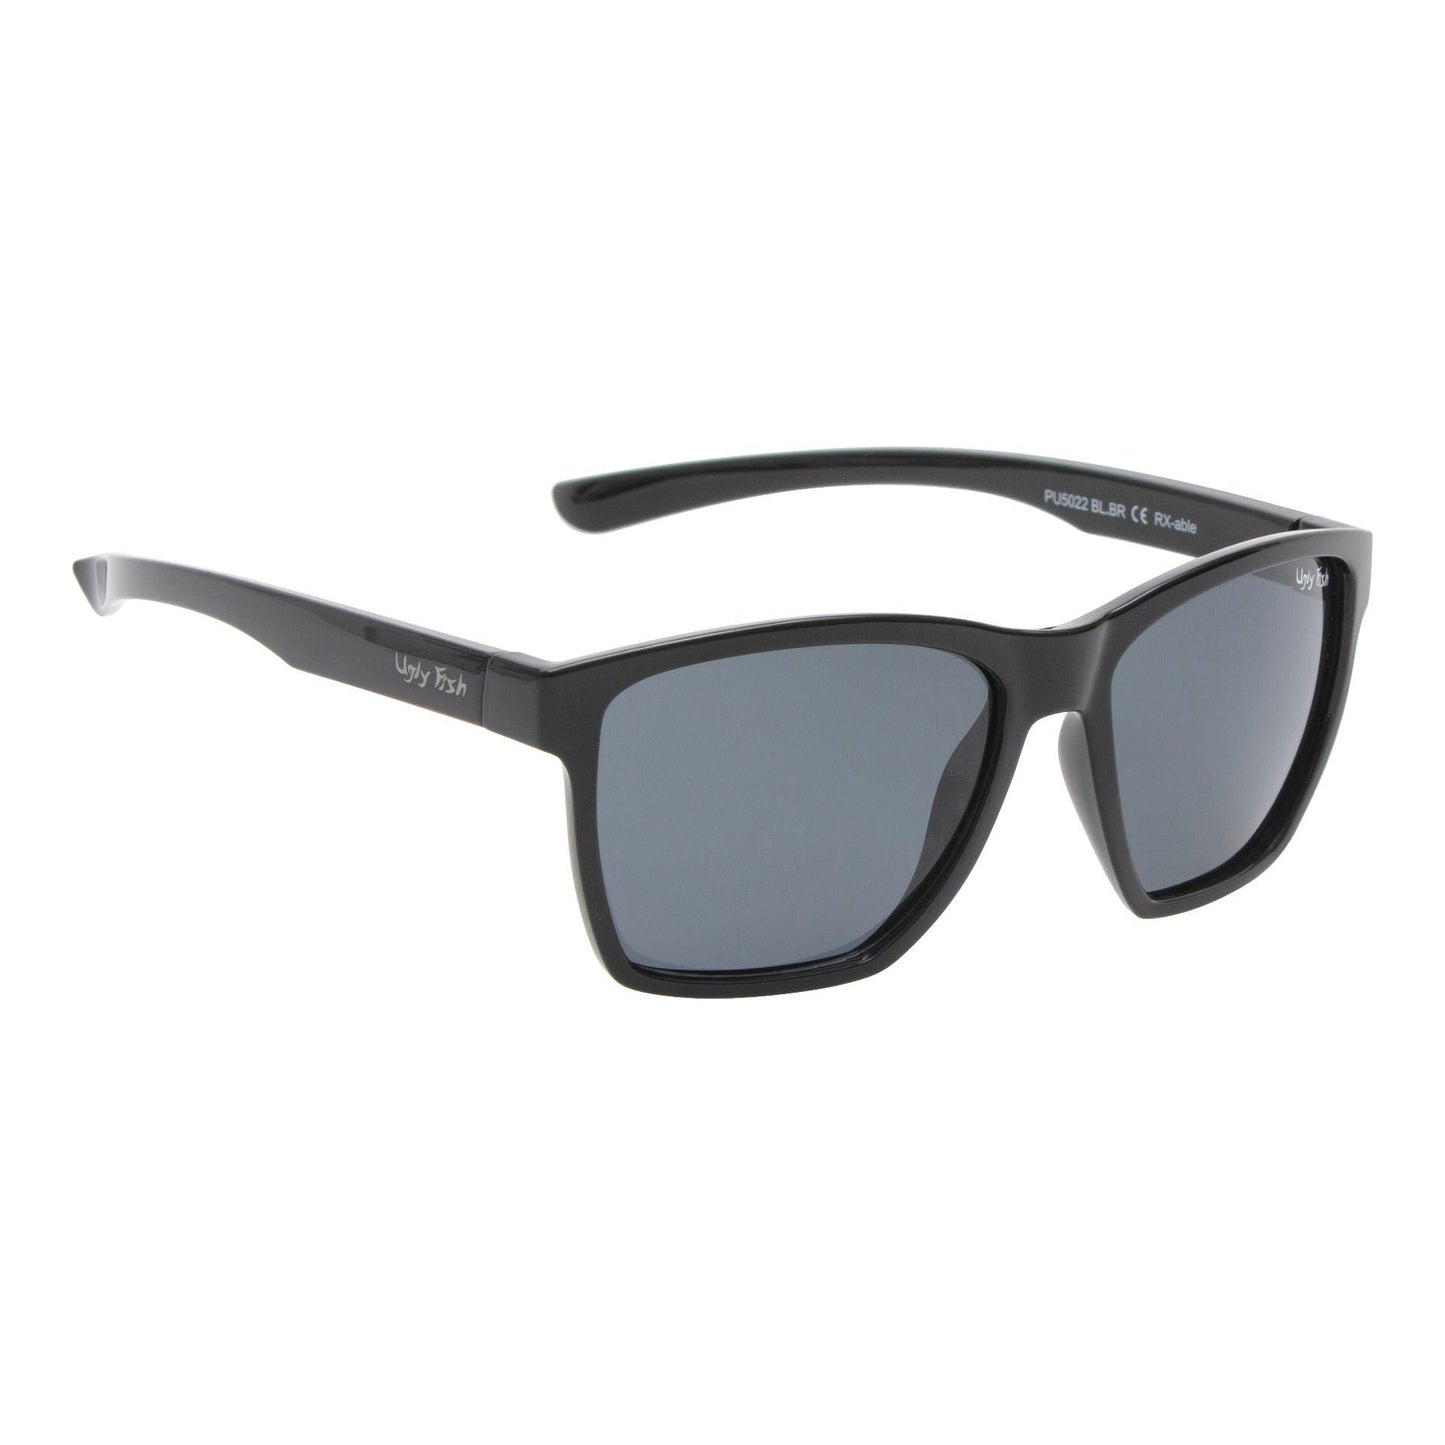 Ugly Fish PU5008 Polarised Sunglasses-Sunglasses-Ugly Fish-Black - Smoke Grey (MBL.SM)-Fishing Station